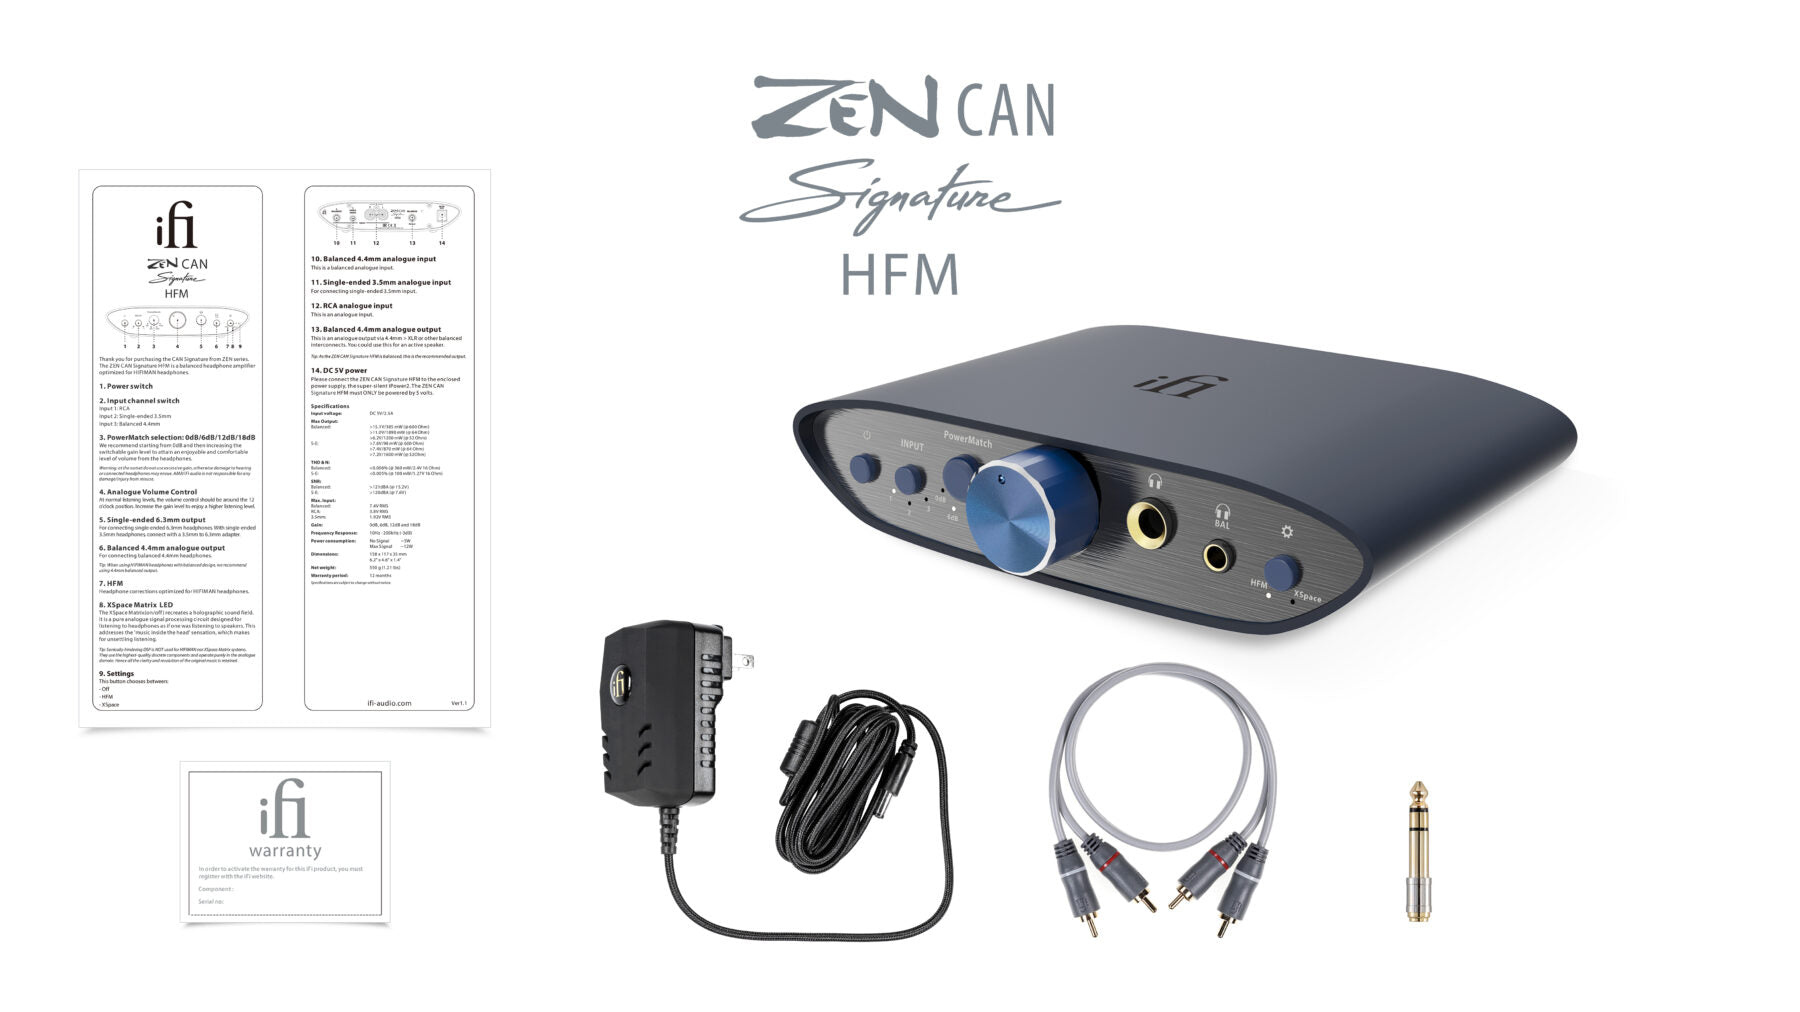 iFi Audio Zen CAN Signature HFM Headphone Amplifier